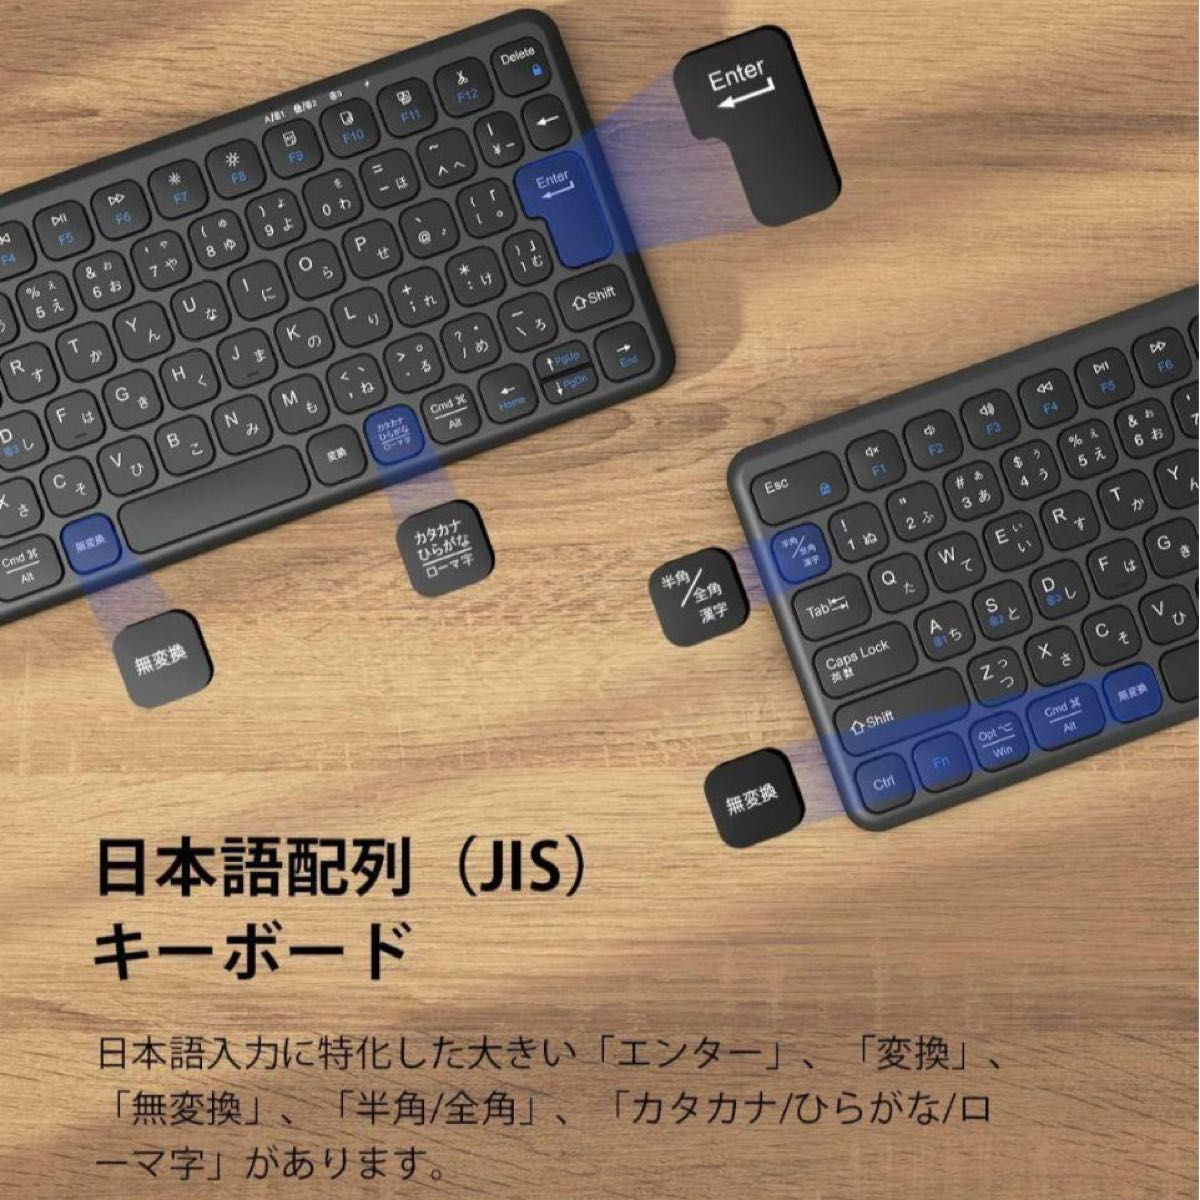 Earto キーボード bluetooth マルチペアリング ワイヤレス キーボード JIS基準日本語配列 デバイス自由 切替え